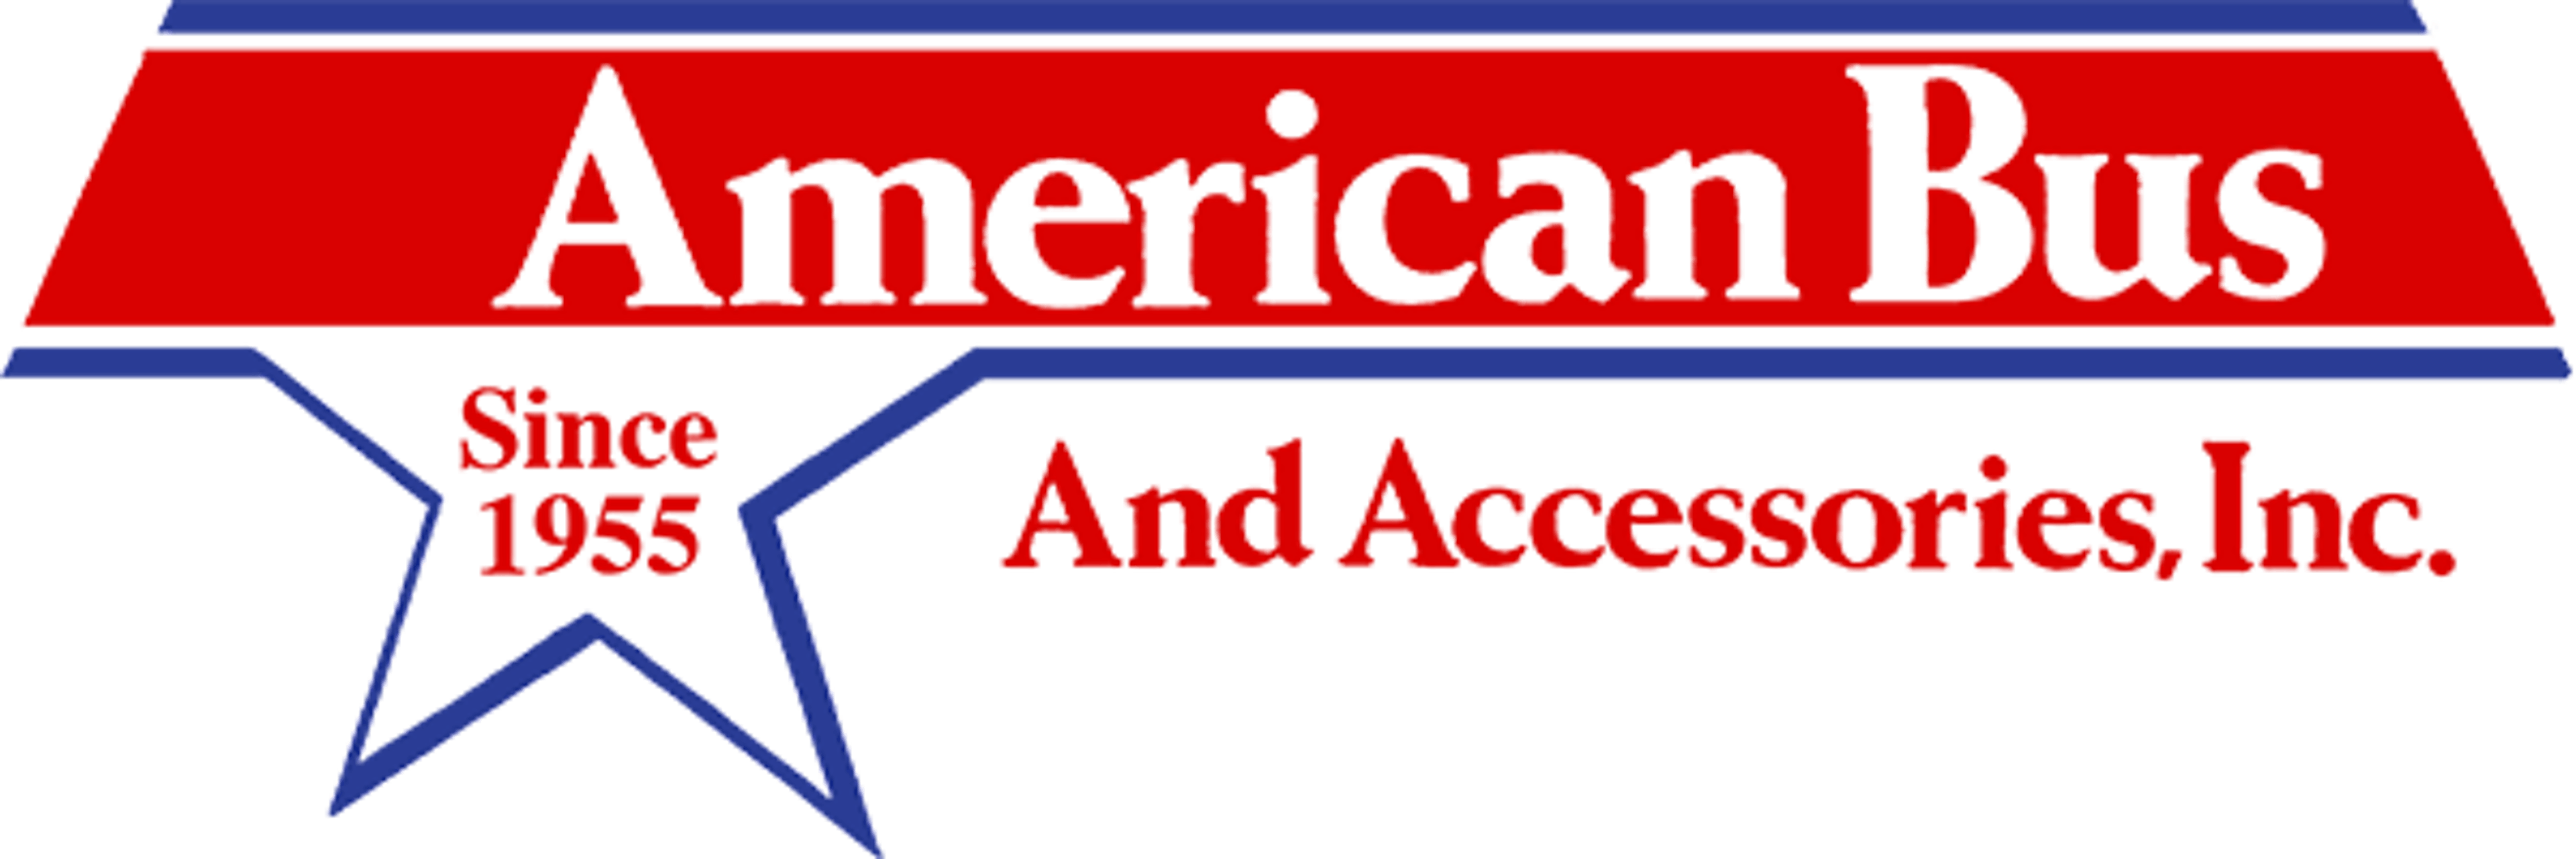 american bus logo